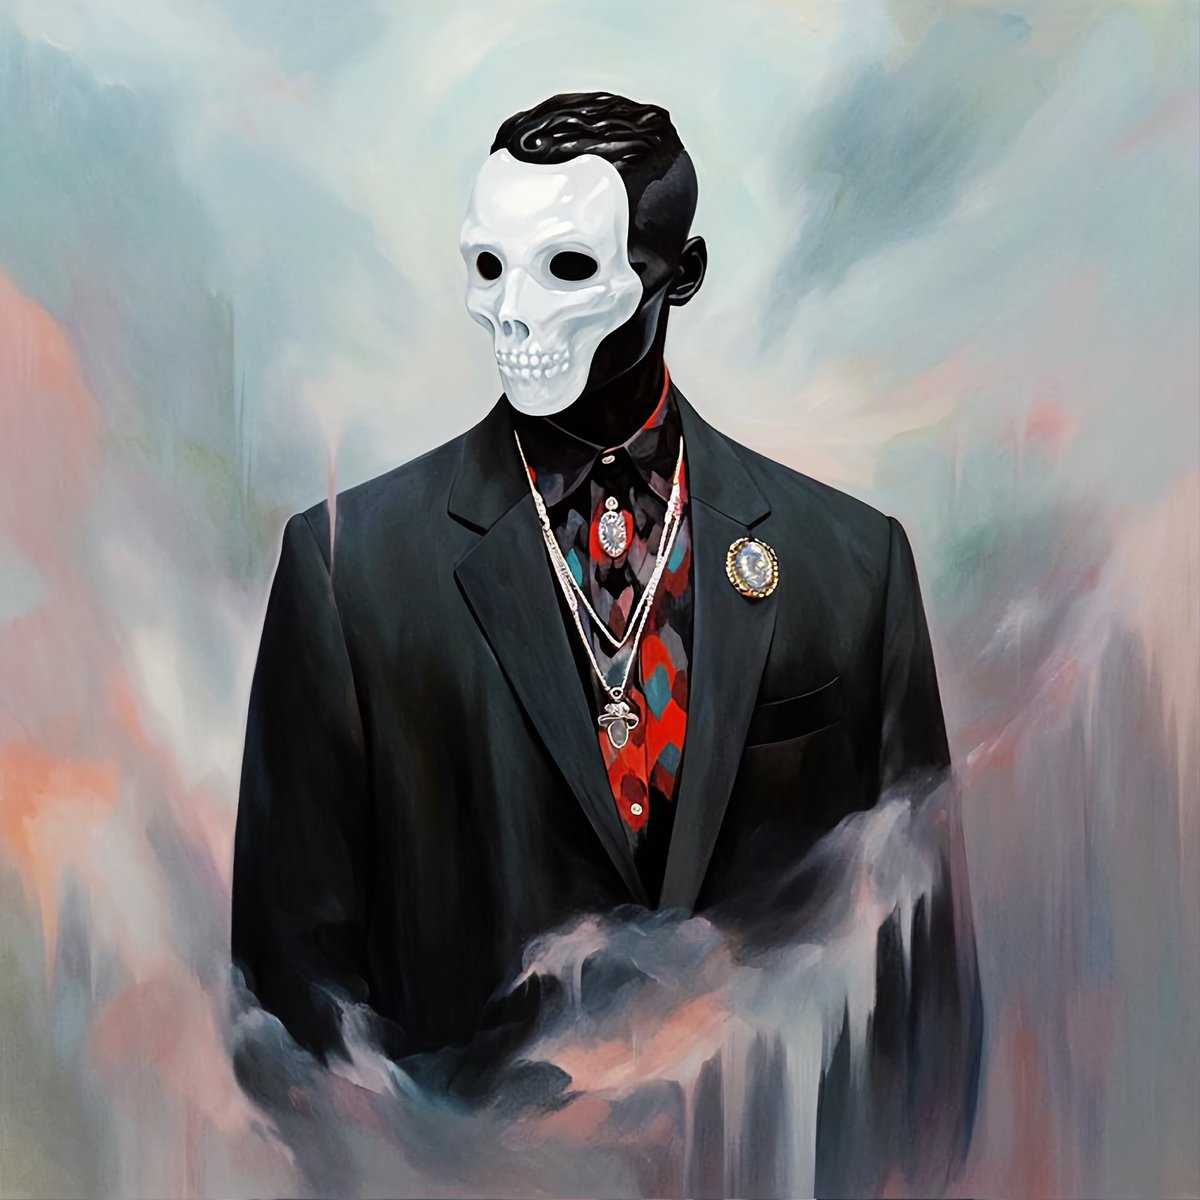 Skull Mask 💀💀
Neo Punks Saga @NeoPunksSaga
and 
'The Man with a Skull Mask'
#DopeArt #AIArtwork #Dopeness
#NFTs #Web3 #NeoPunksSaga